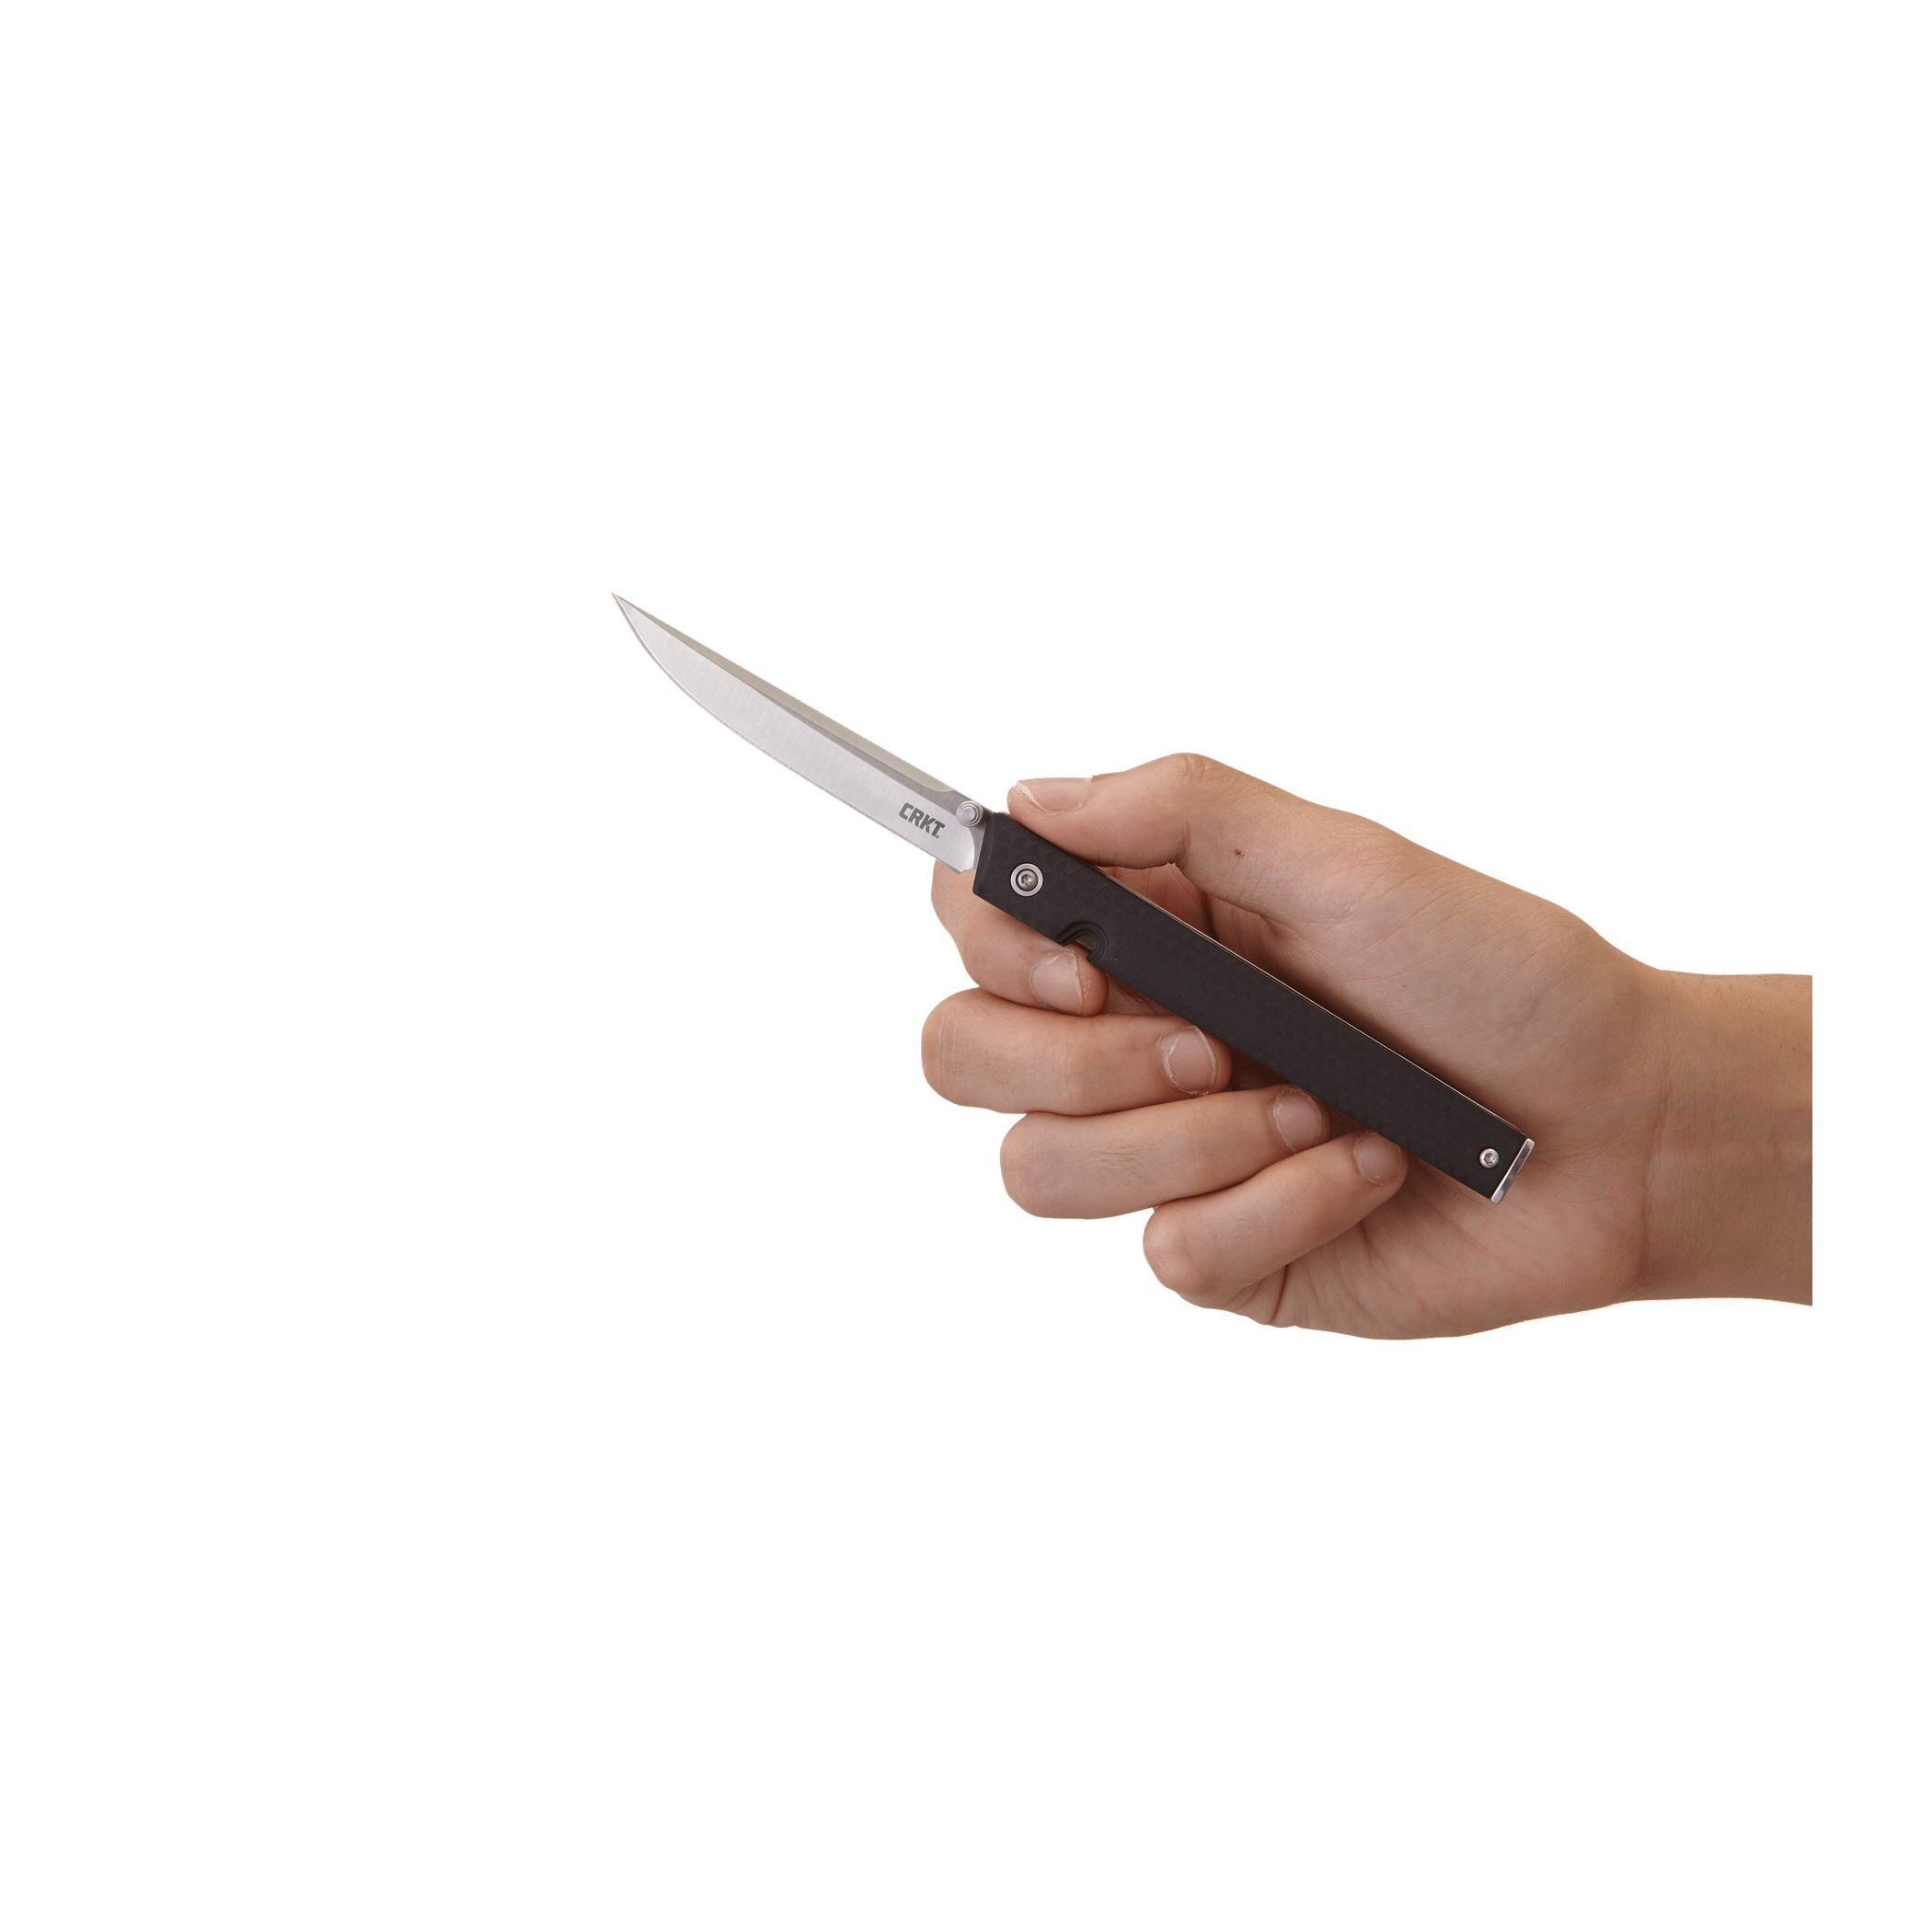 Endorser 7096 CEO Folding Knife, 3.11 in L Blade, Steel Blade - 5